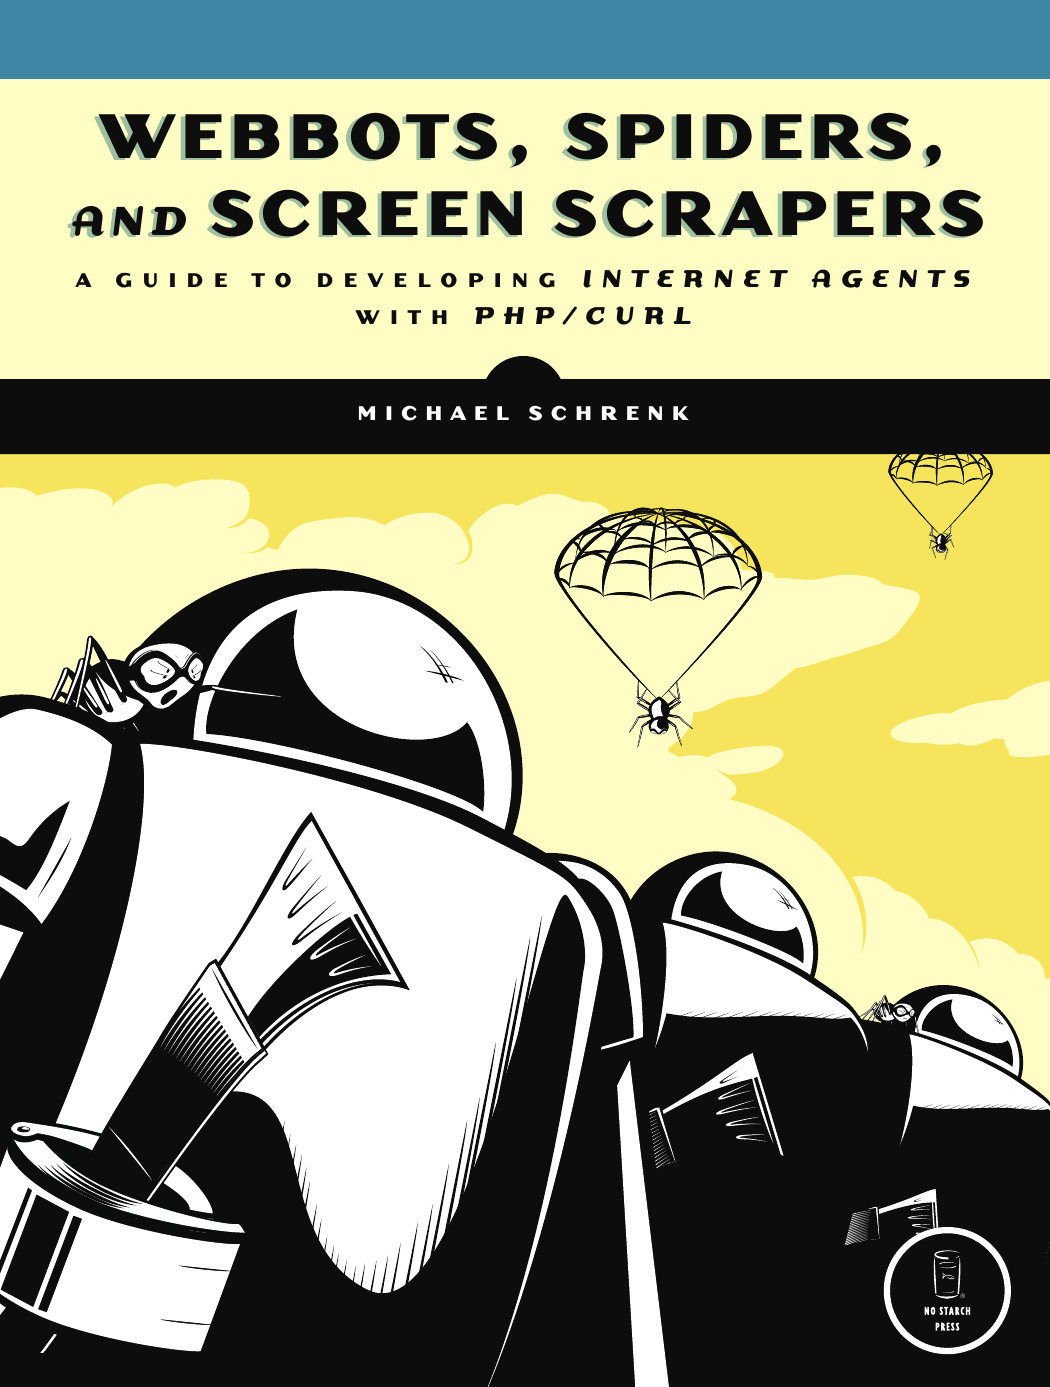 Webbots, Spiders, and Screen Scrapers